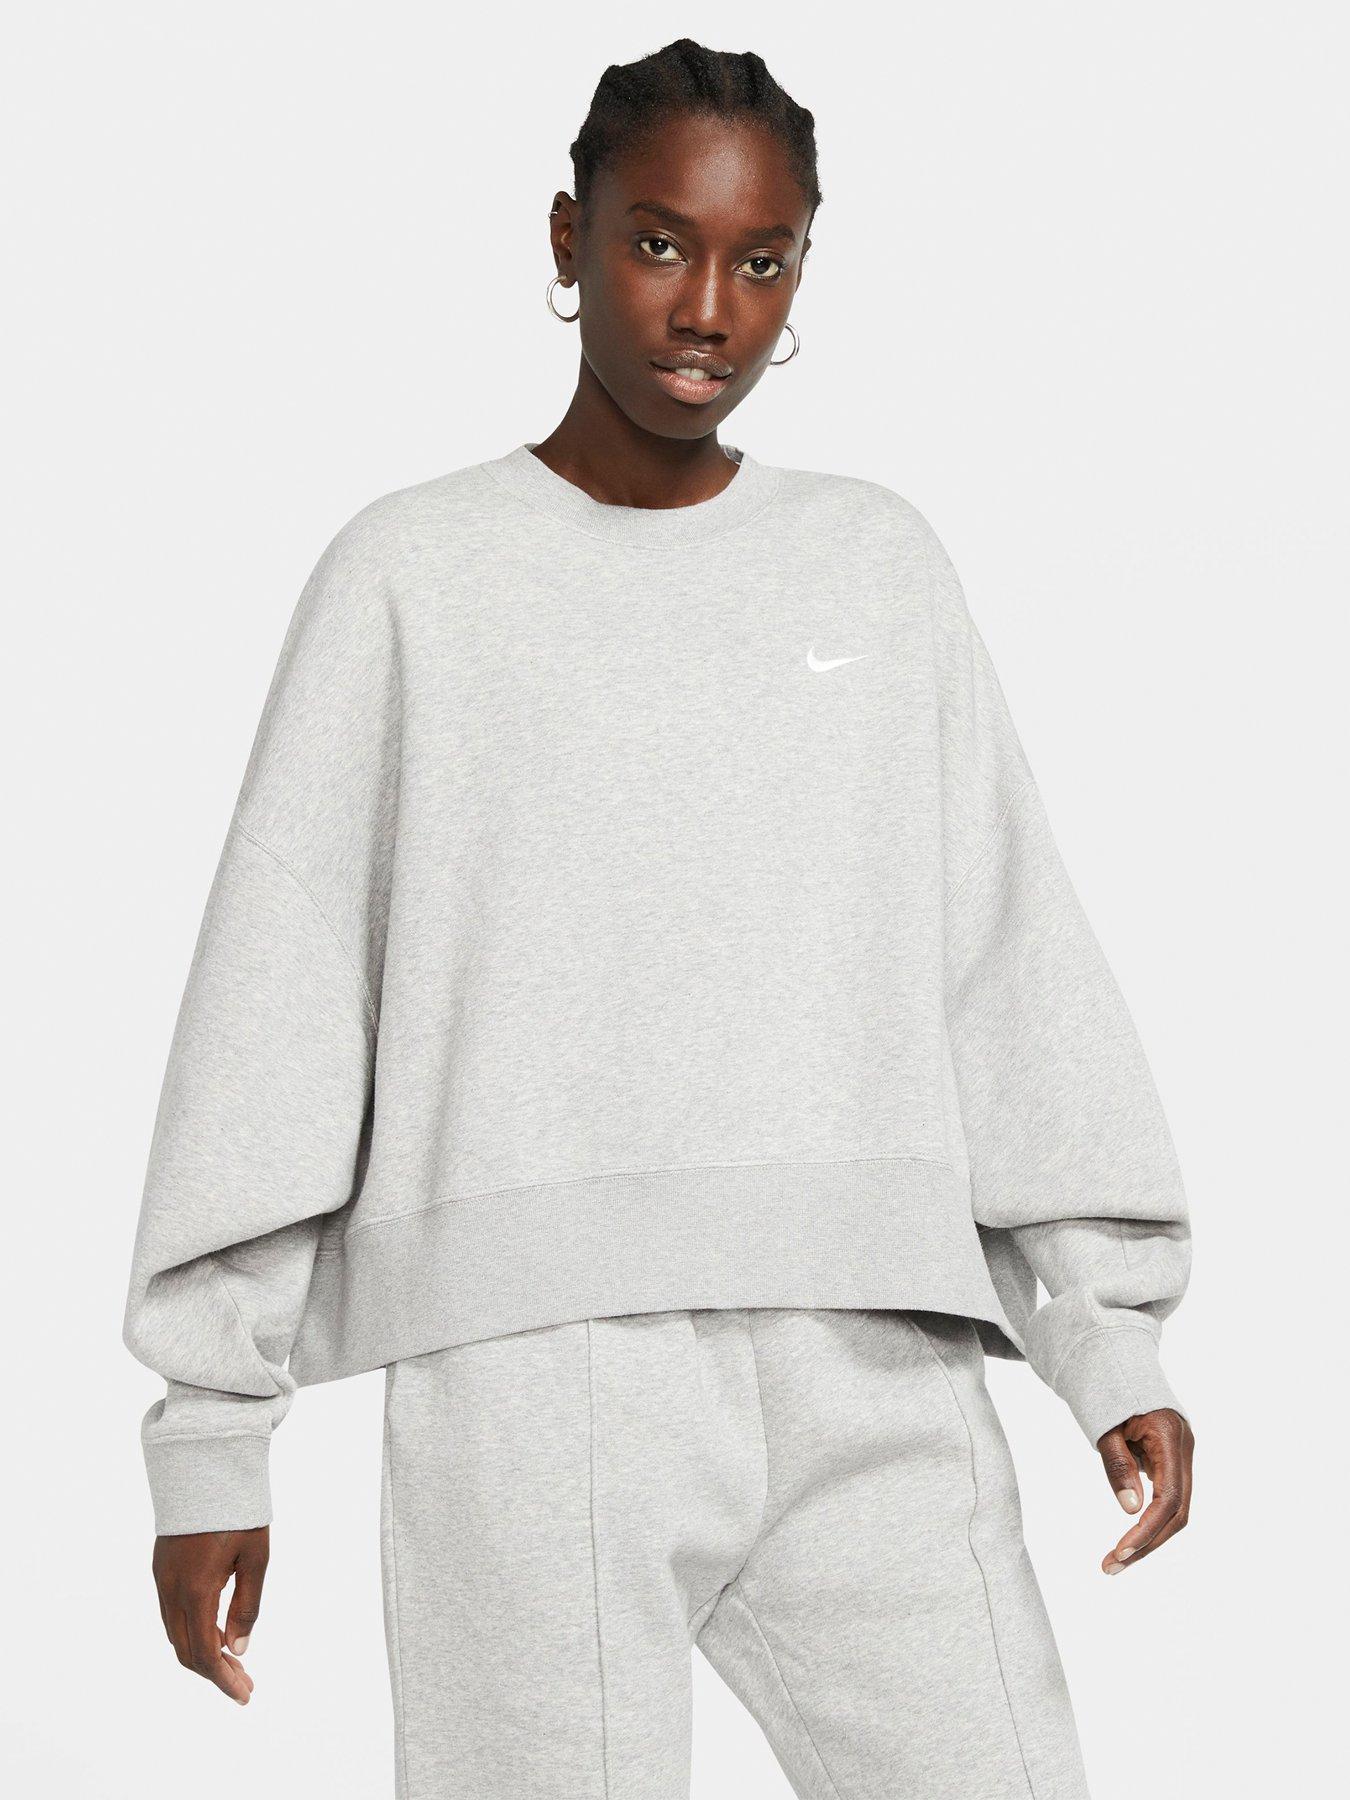 Nike NSW Trend Sweatshirt - Dark Grey 